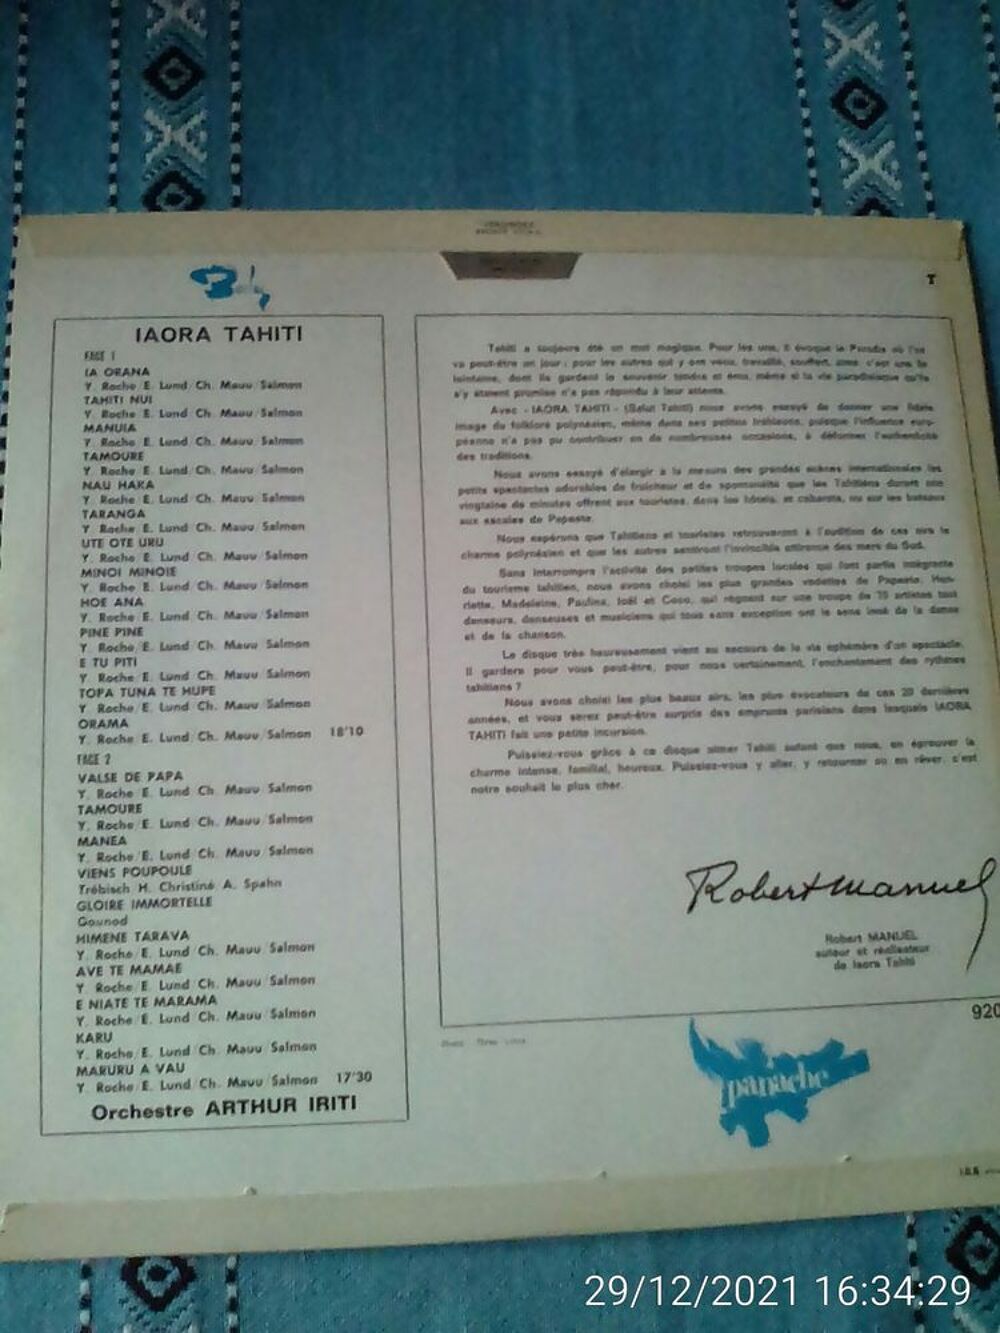 Vinyle 33T CHANTS TAHITIENS - IAORA TAHITI CD et vinyles